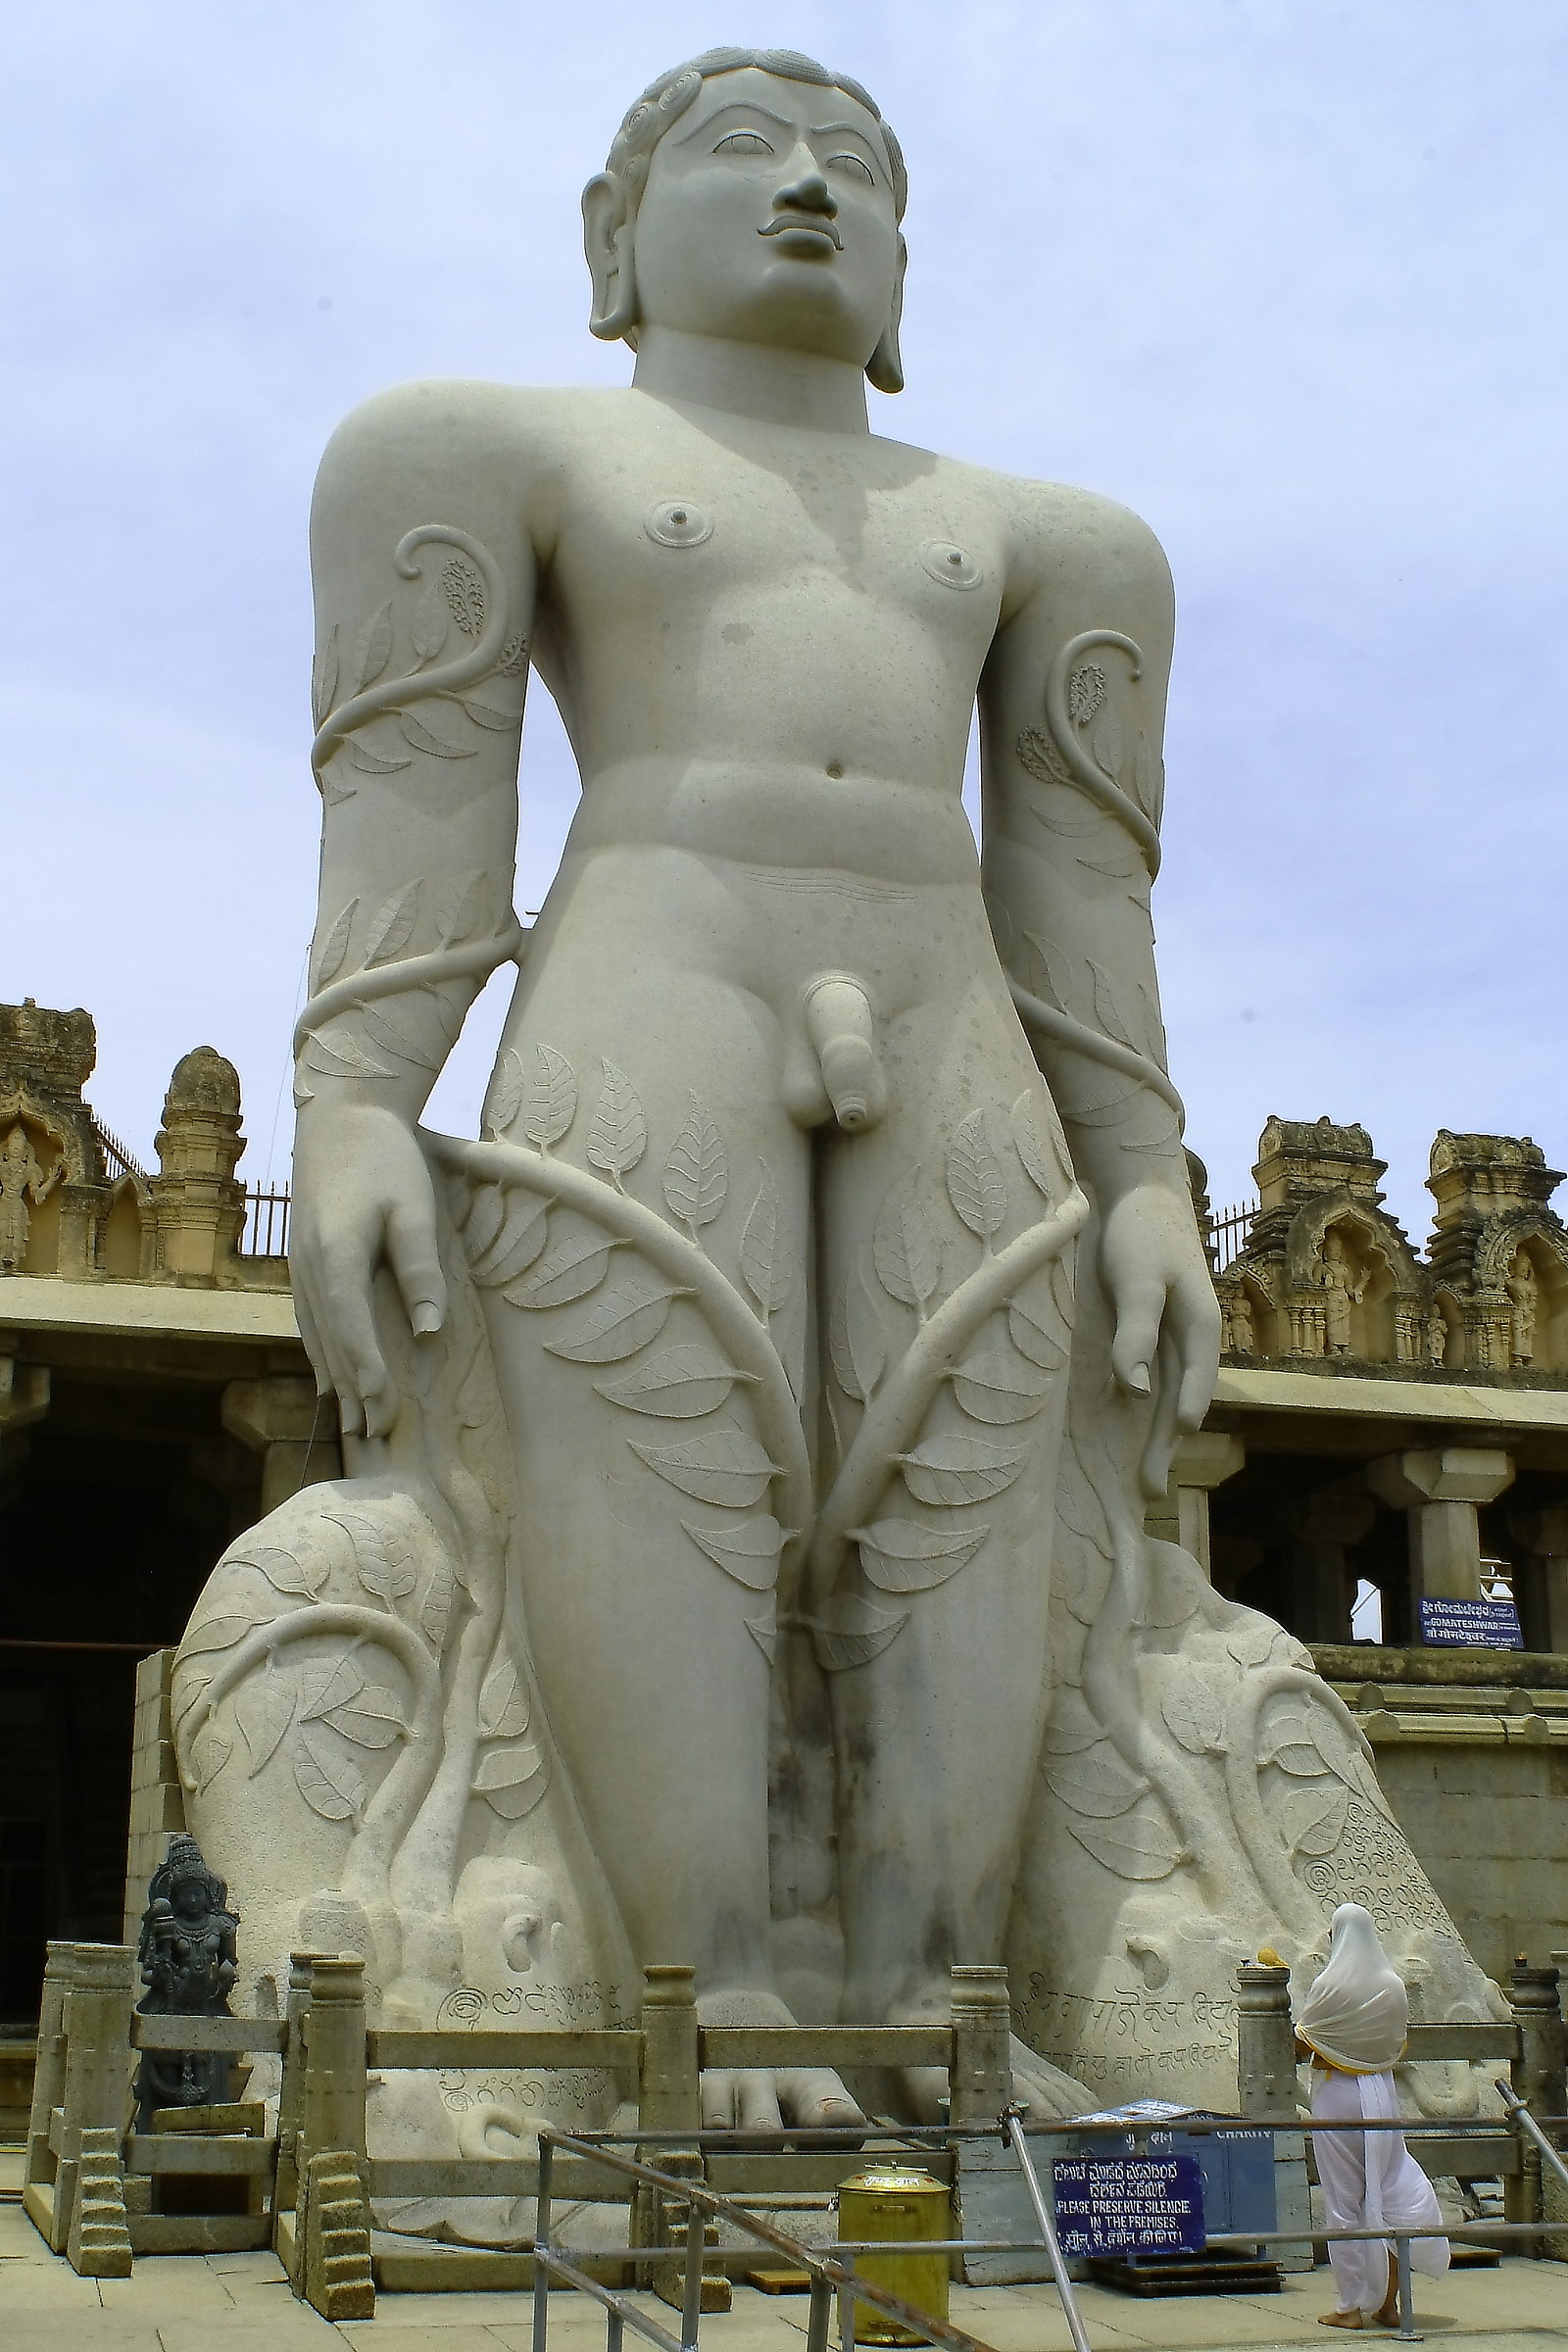 Jain Temple of Sravana Belgola, Karnataka...